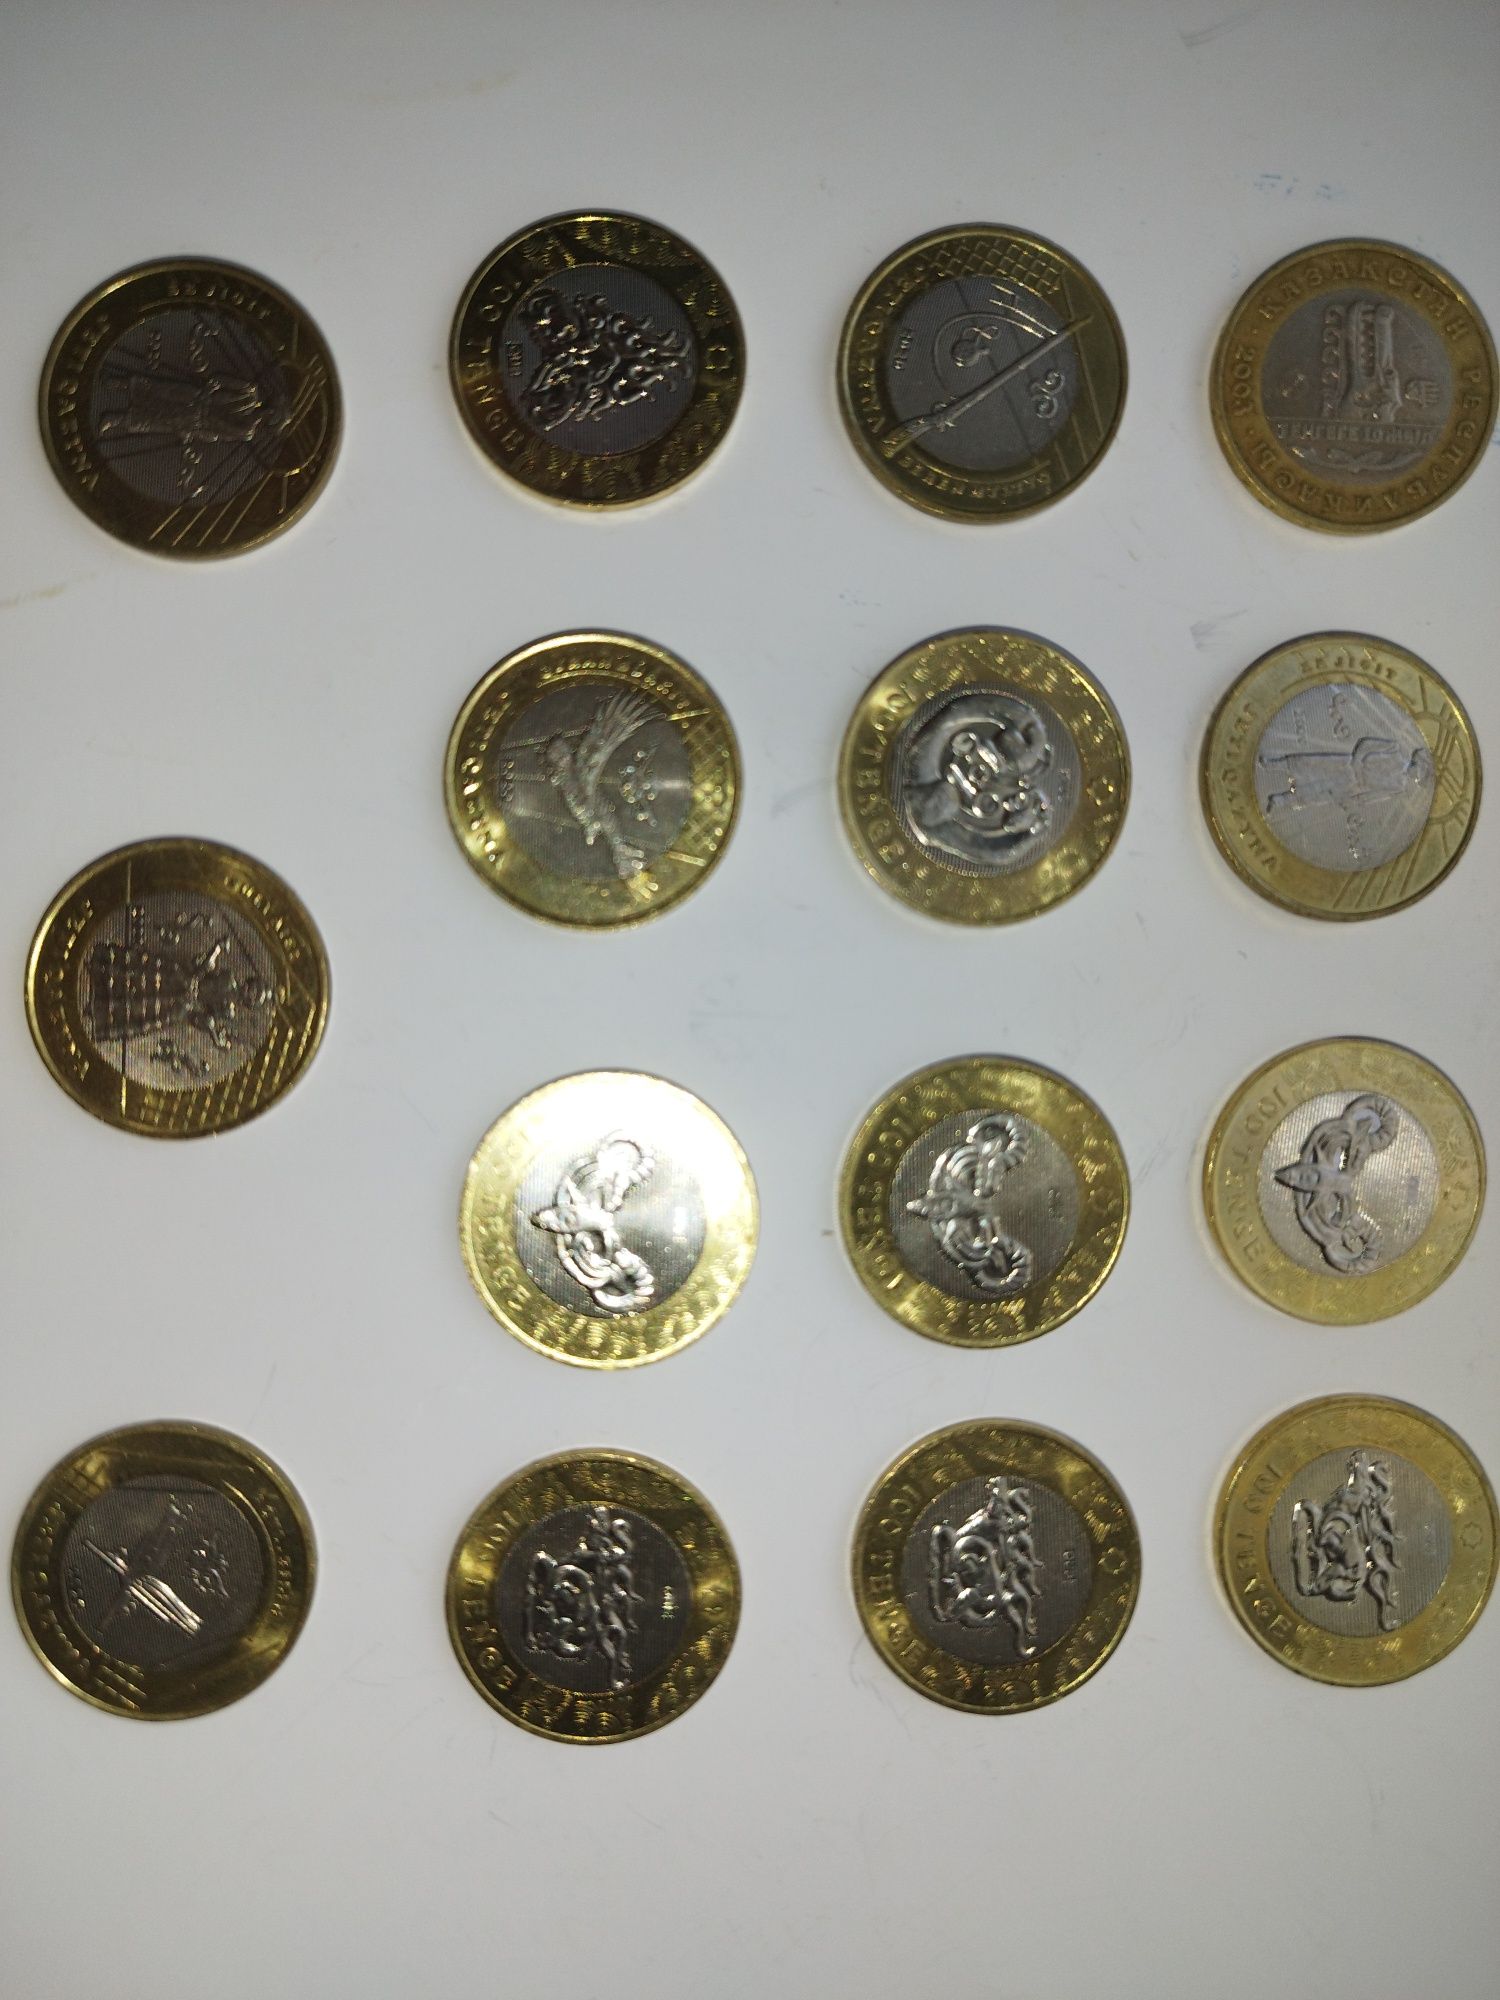 Монета 100 тенге